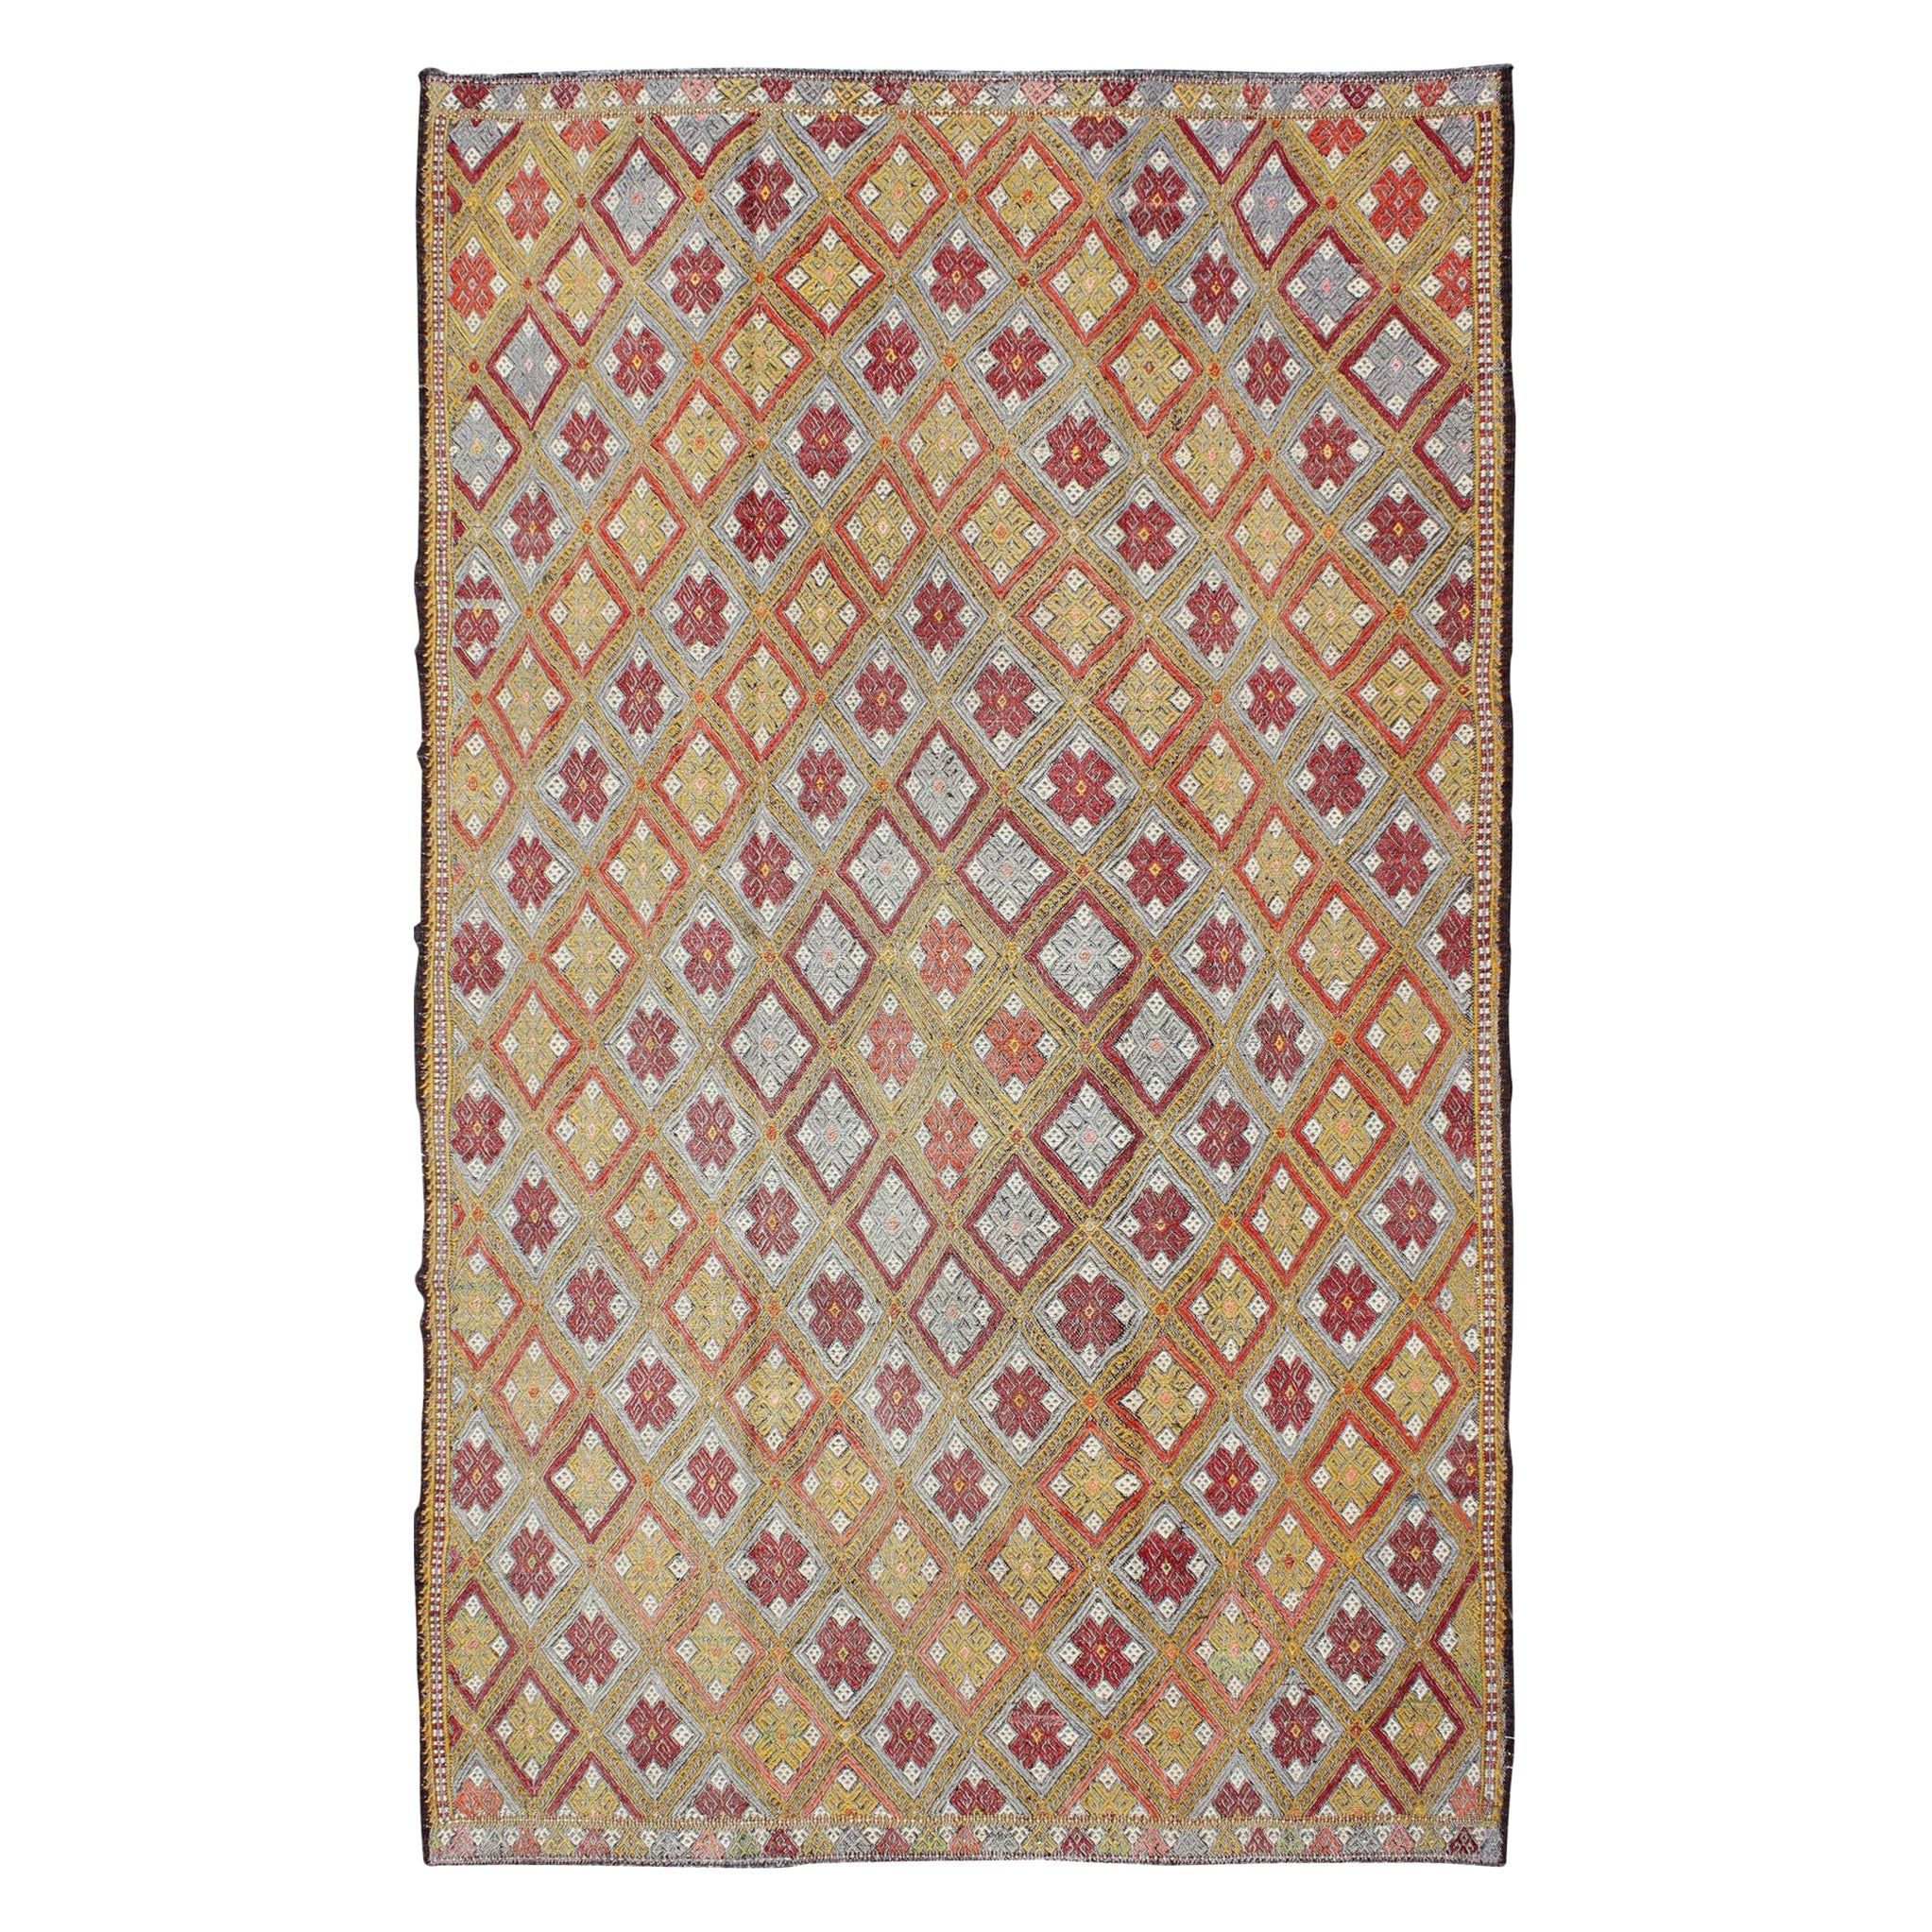 Colorful Vintage Turkish Flat-Weave Embroidered Kilim with Diamond Design